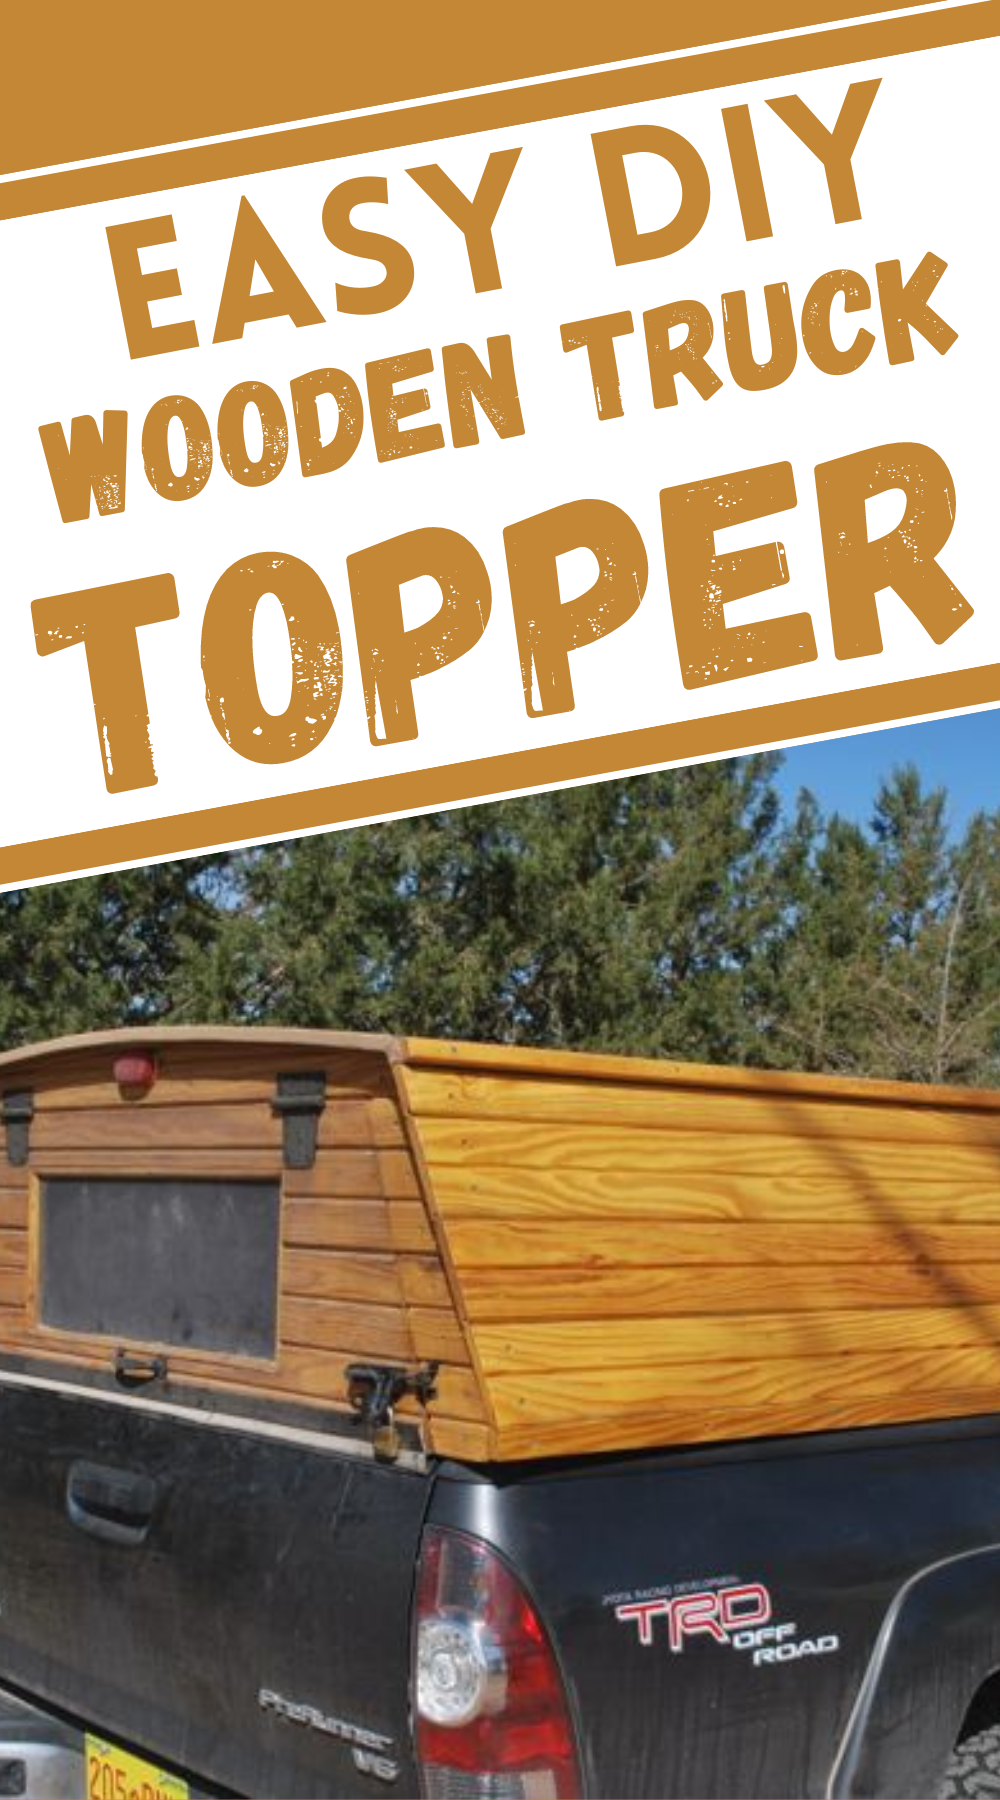 Easy Wooden Truck Topper